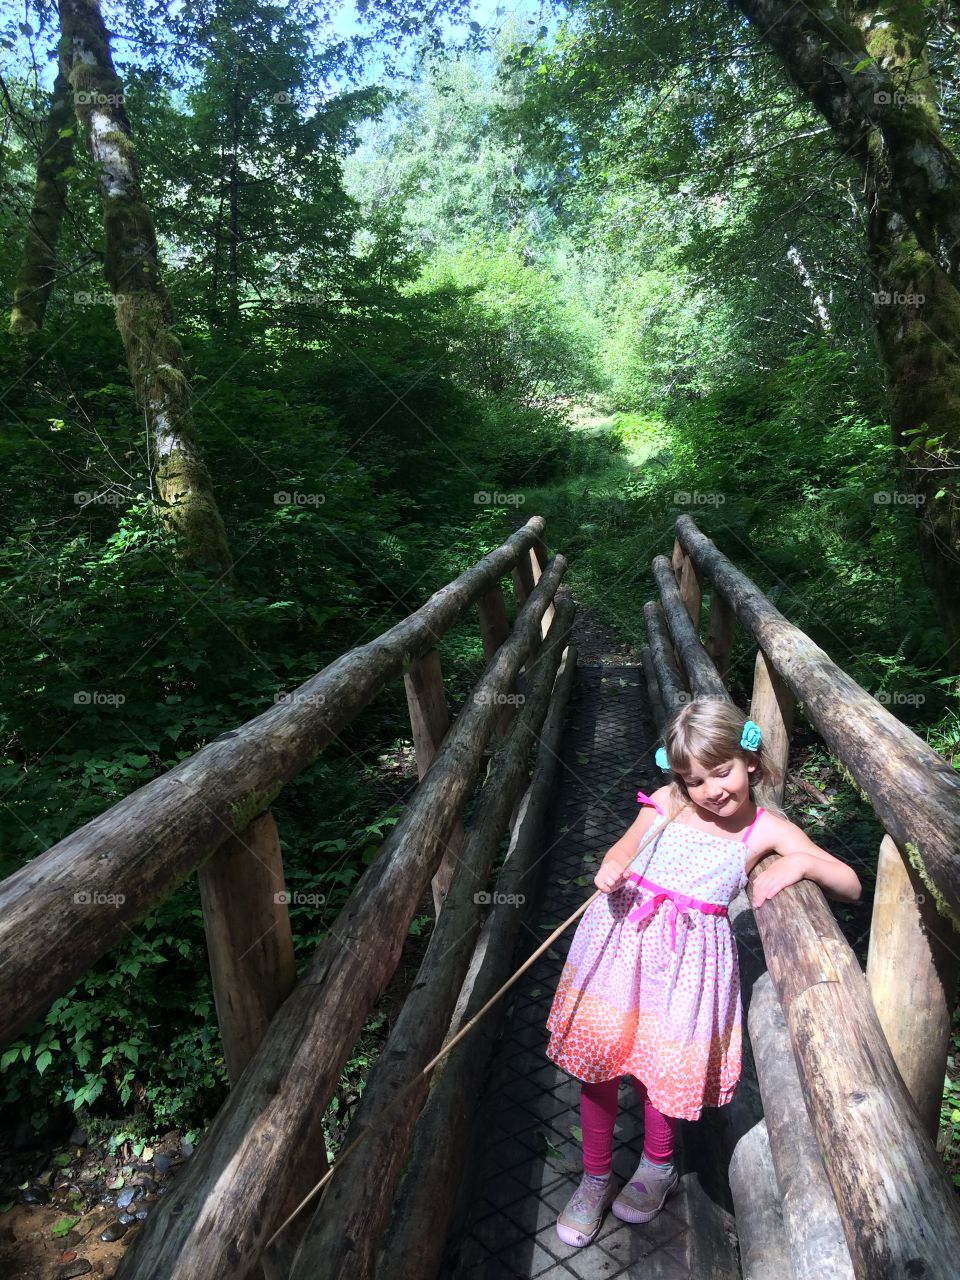 On the bridge. Girl on wooden bridge in forest